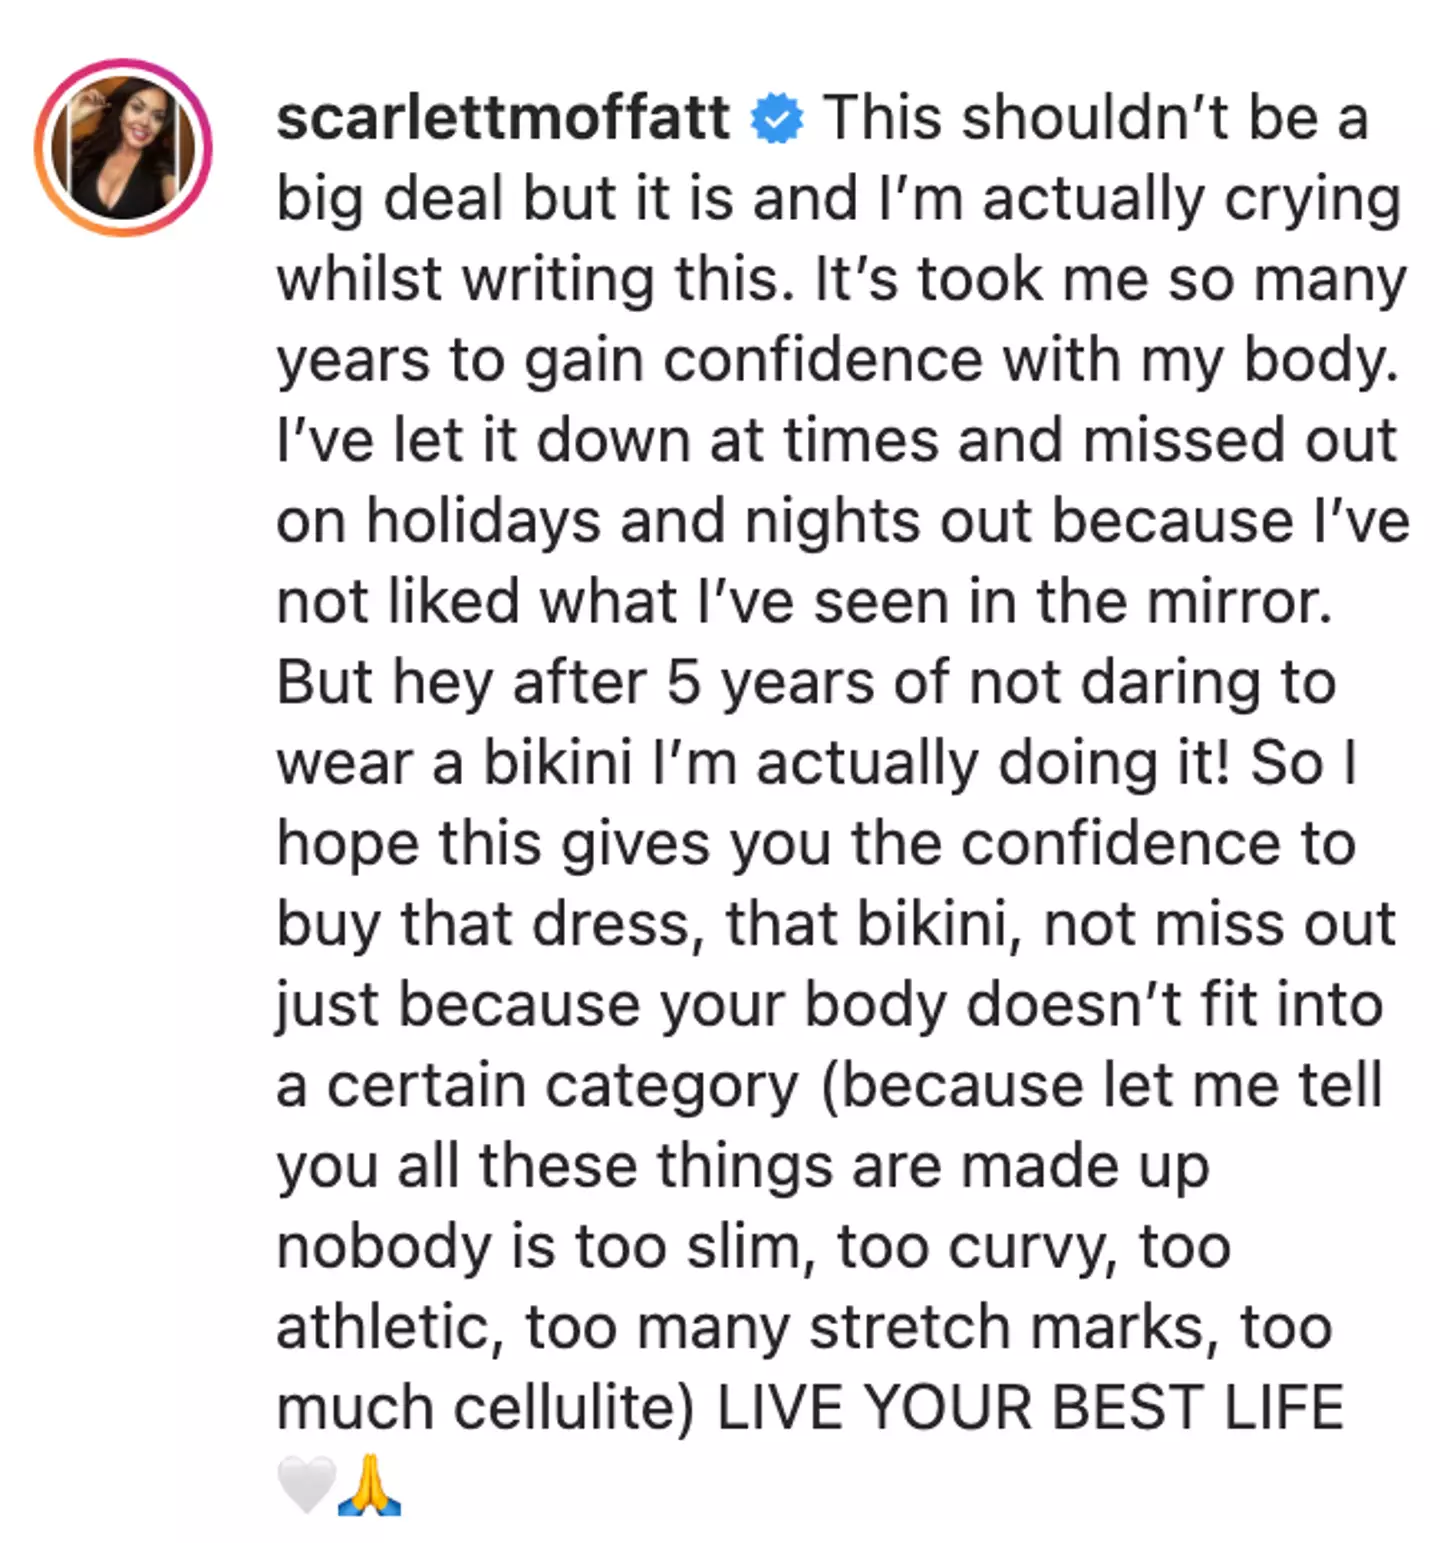 Scarlett Moffatt wants to encourage other women to feel confident in their bodies (